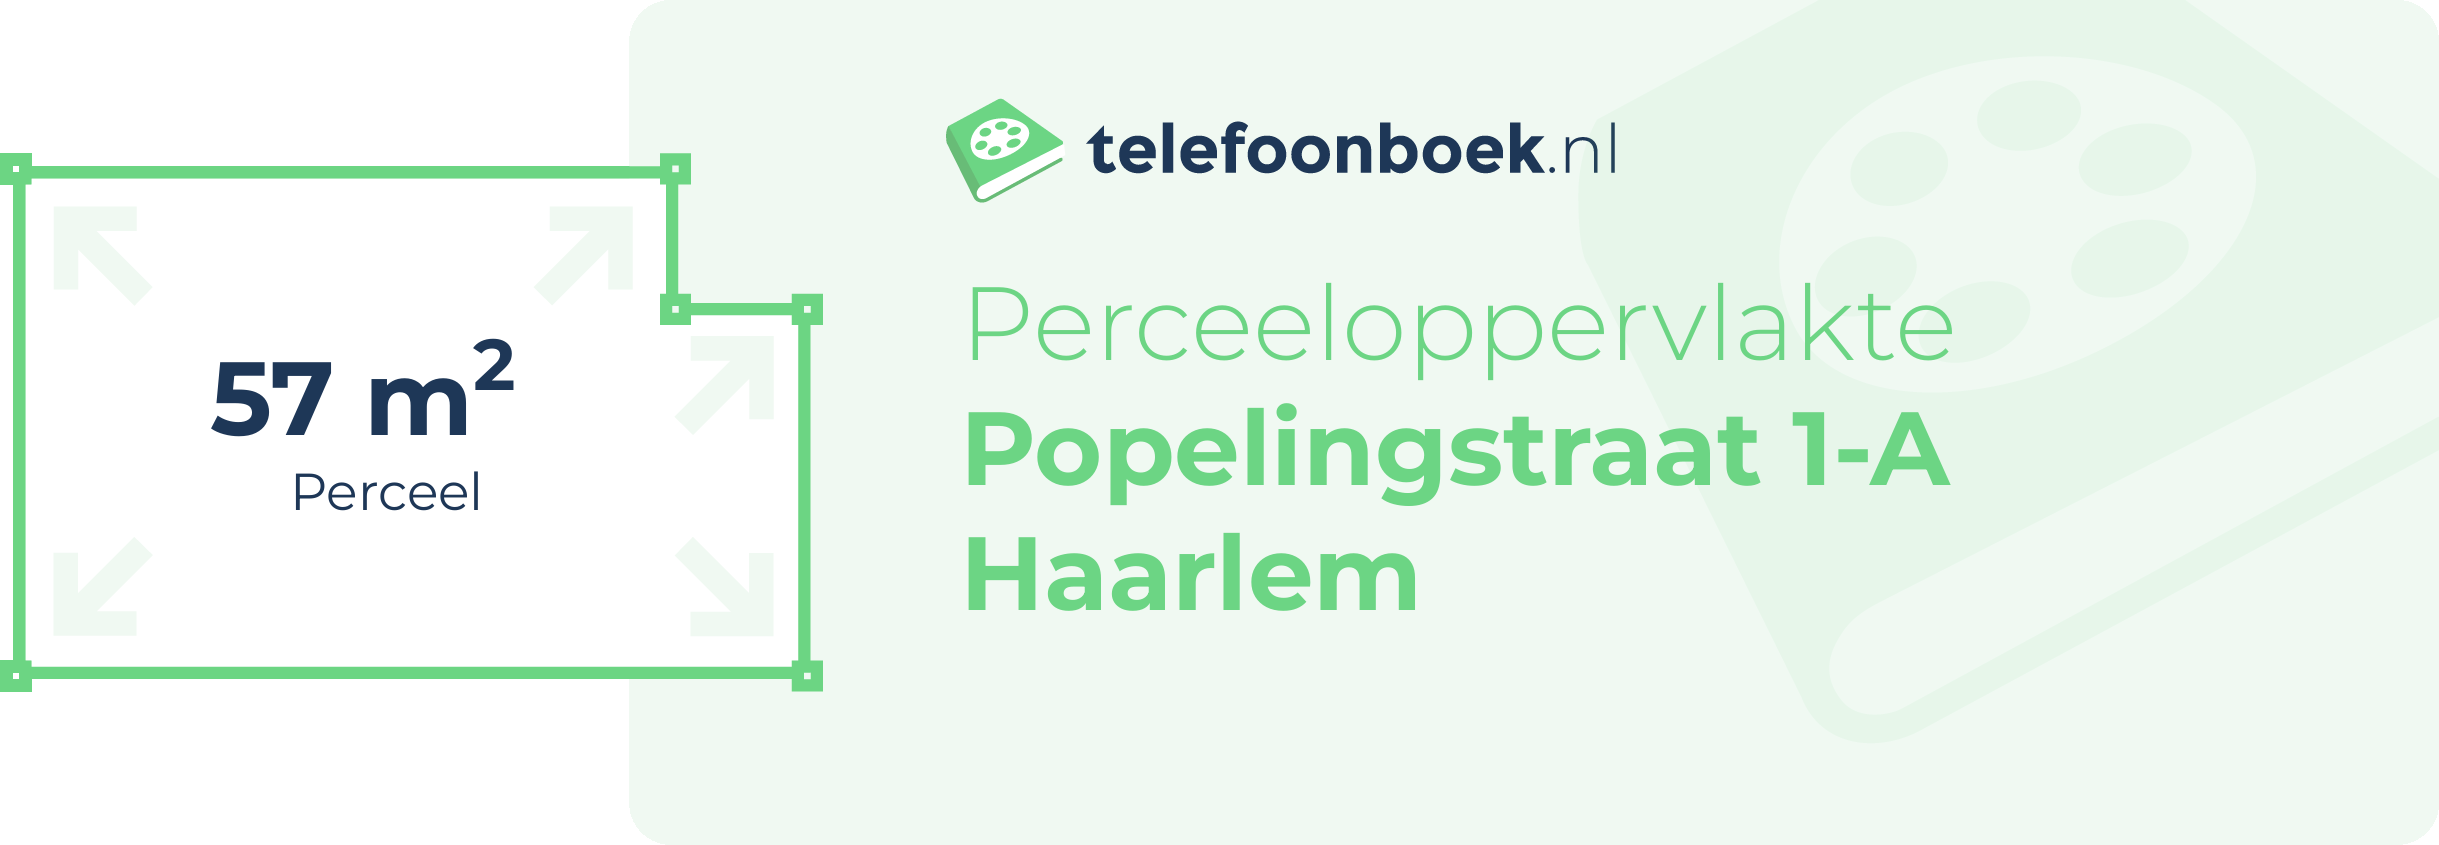 Perceeloppervlakte Popelingstraat 1-A Haarlem